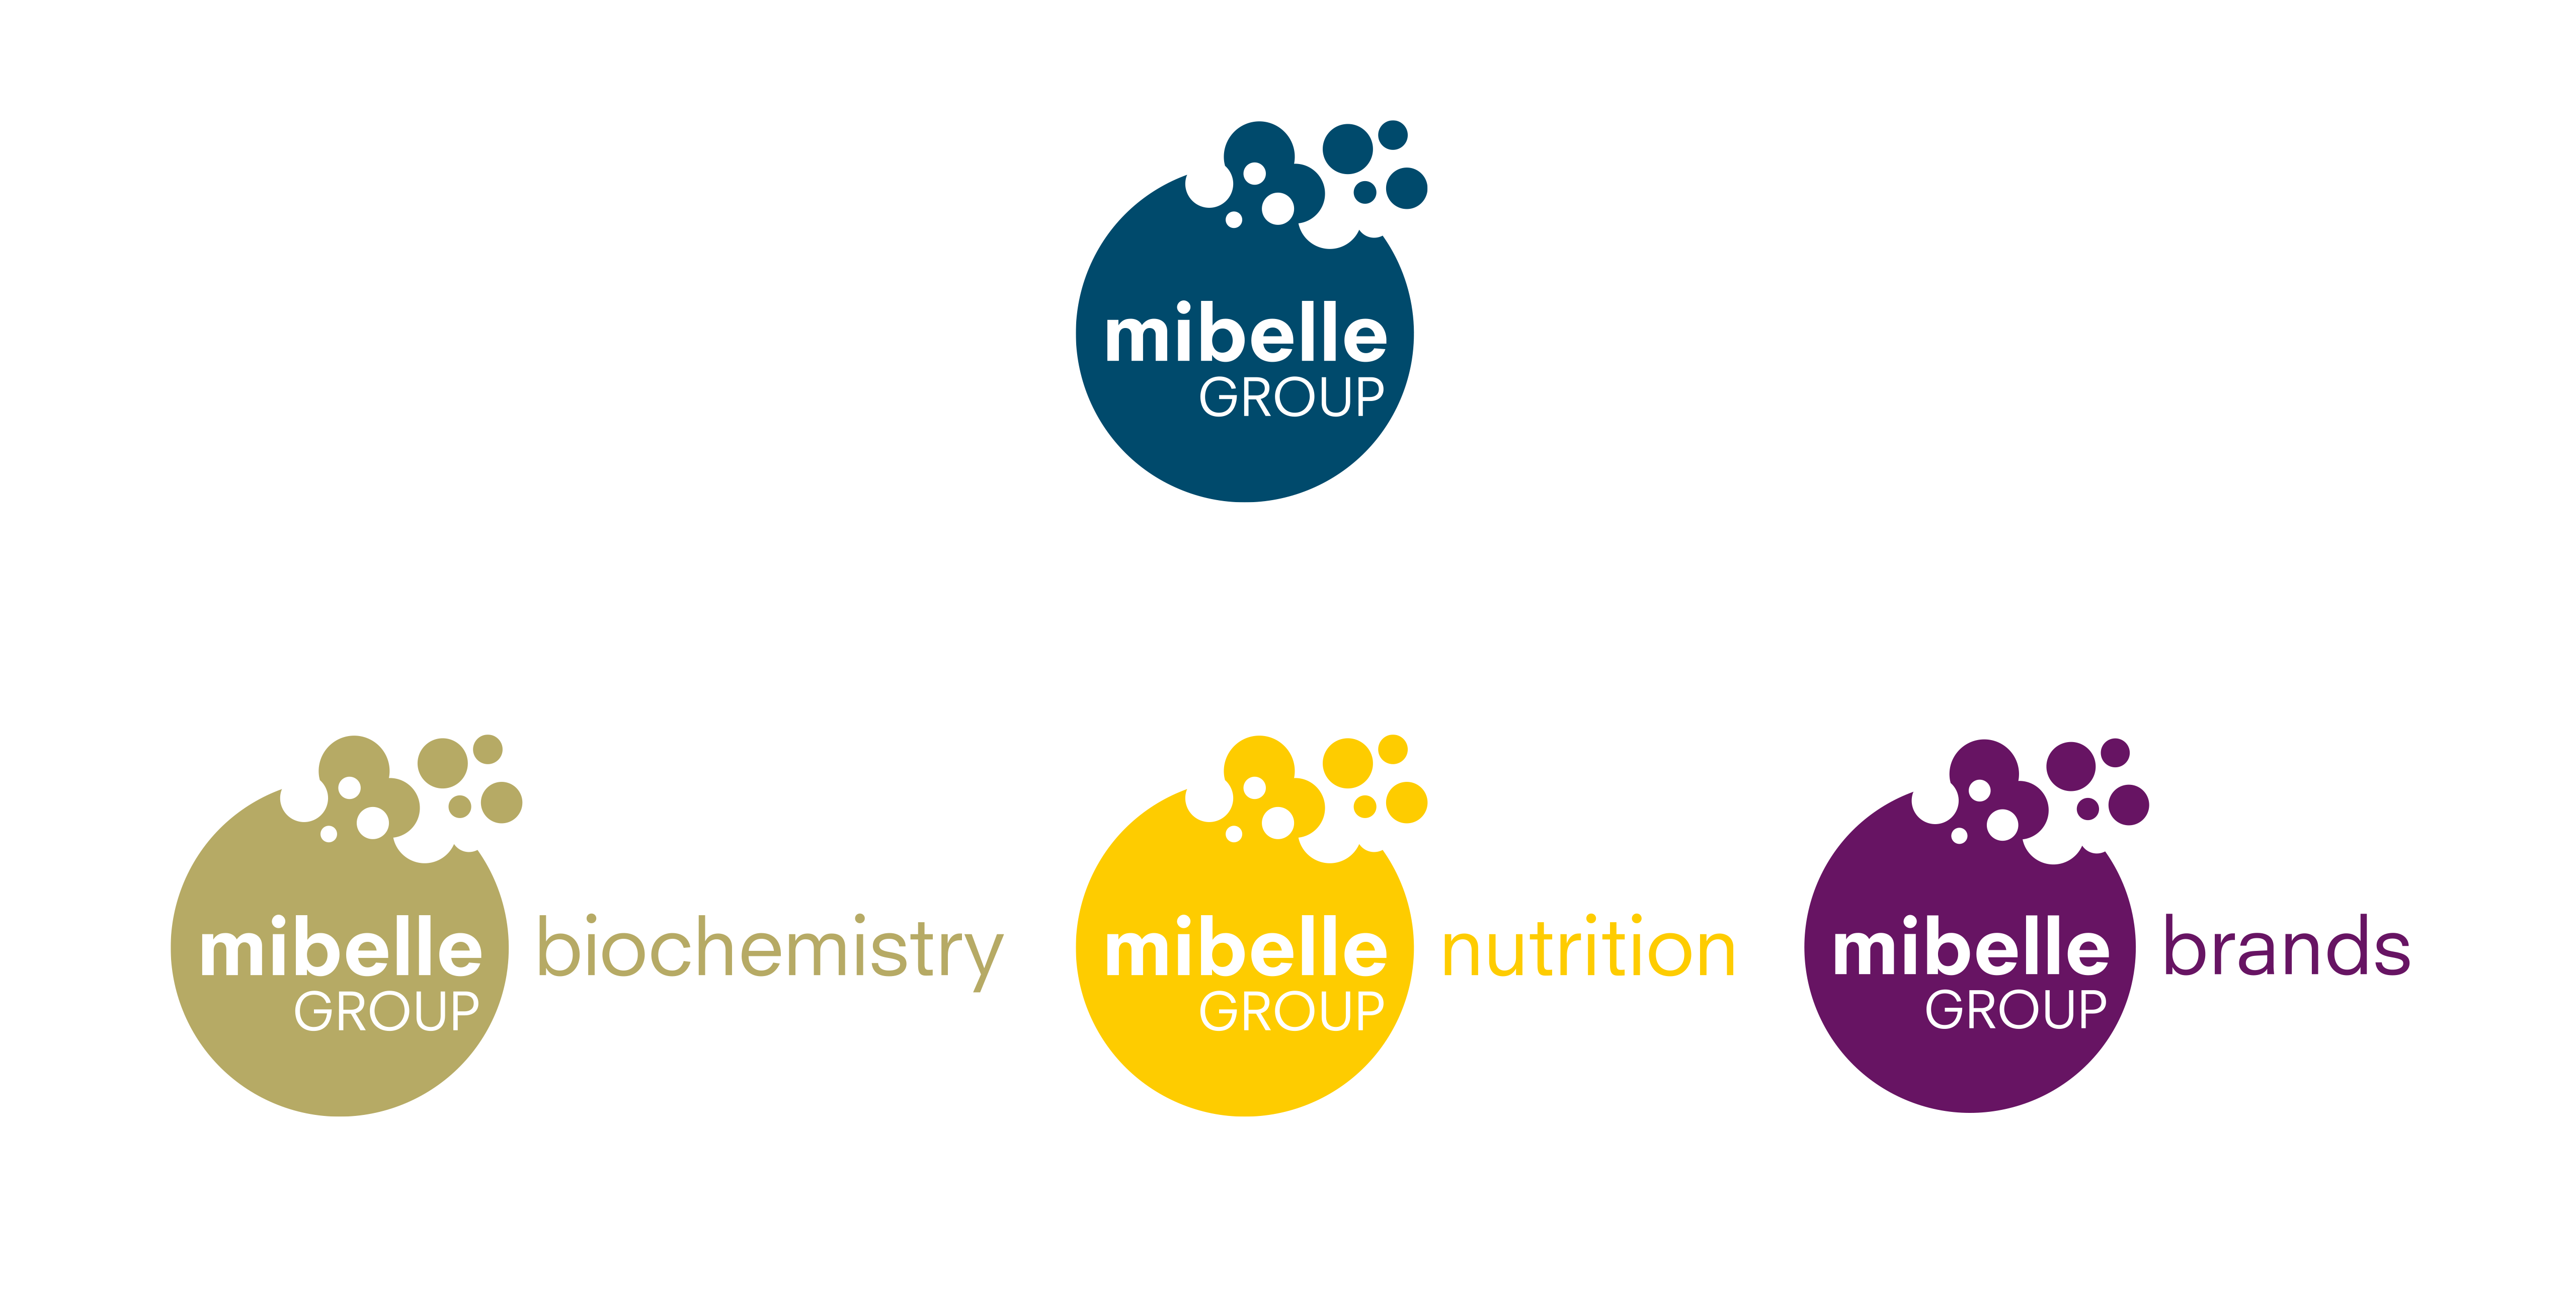 Mibelle_Group_Branding_Logos_uebersicht_01@2x